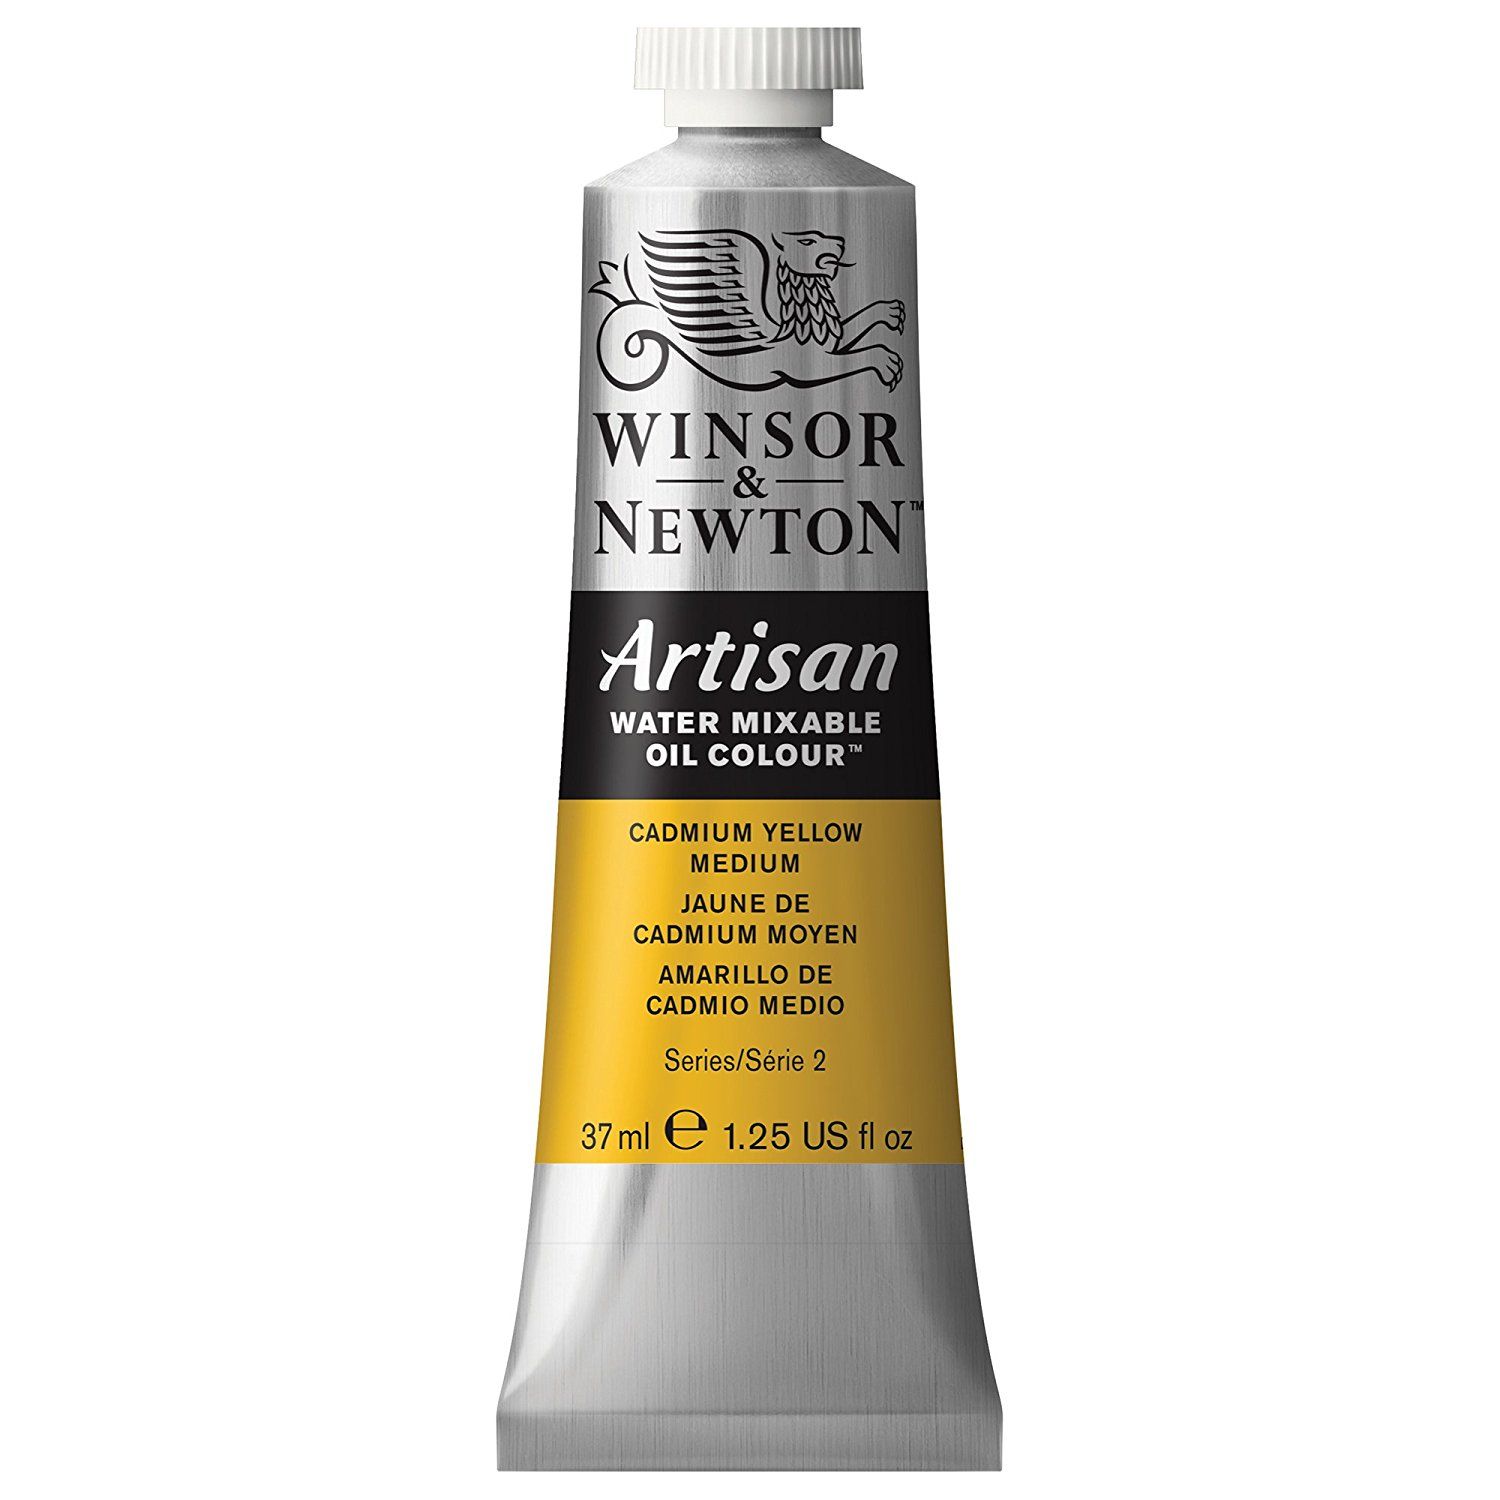 Artisan Water Mixable Oil - Cadmium Yellow Medium 37ml